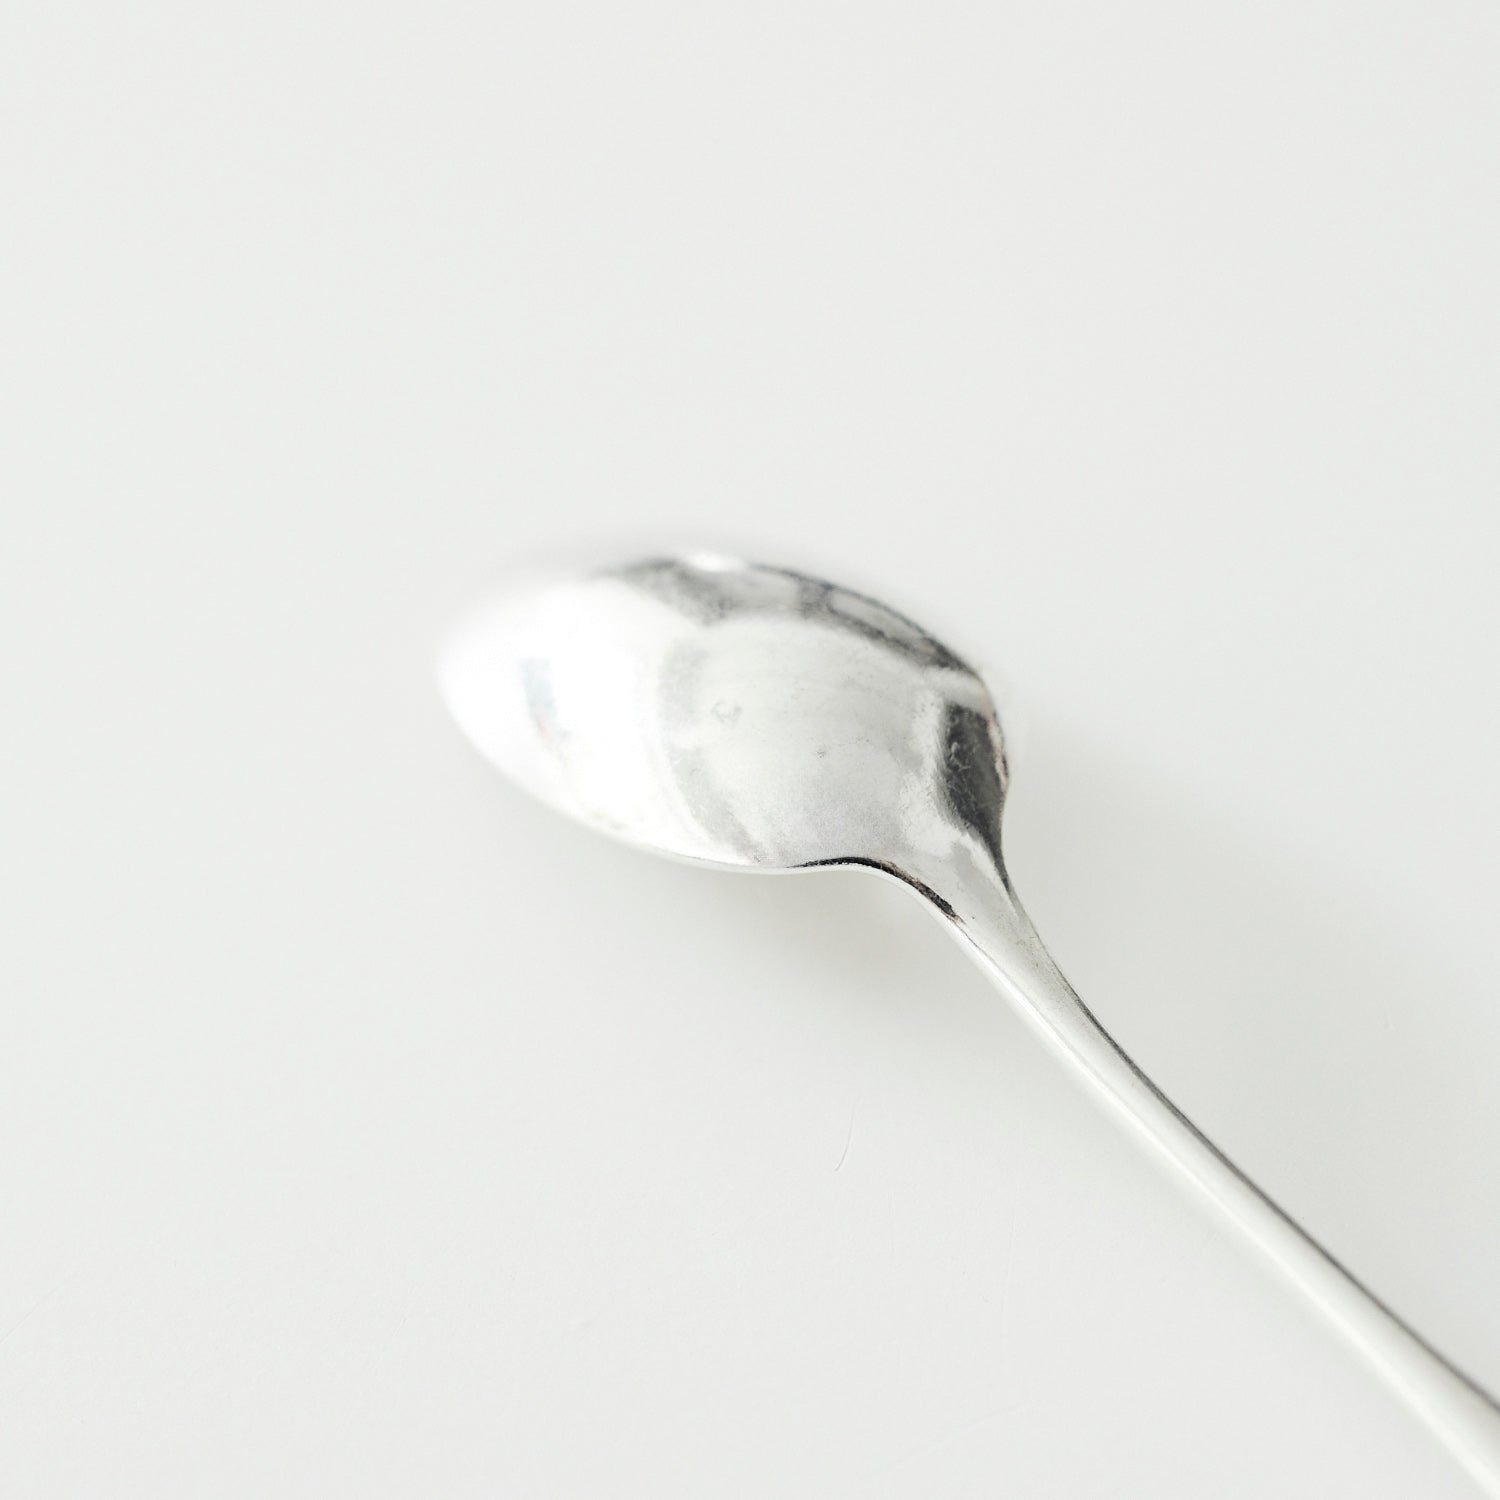 French 20C Baguette teaspoon